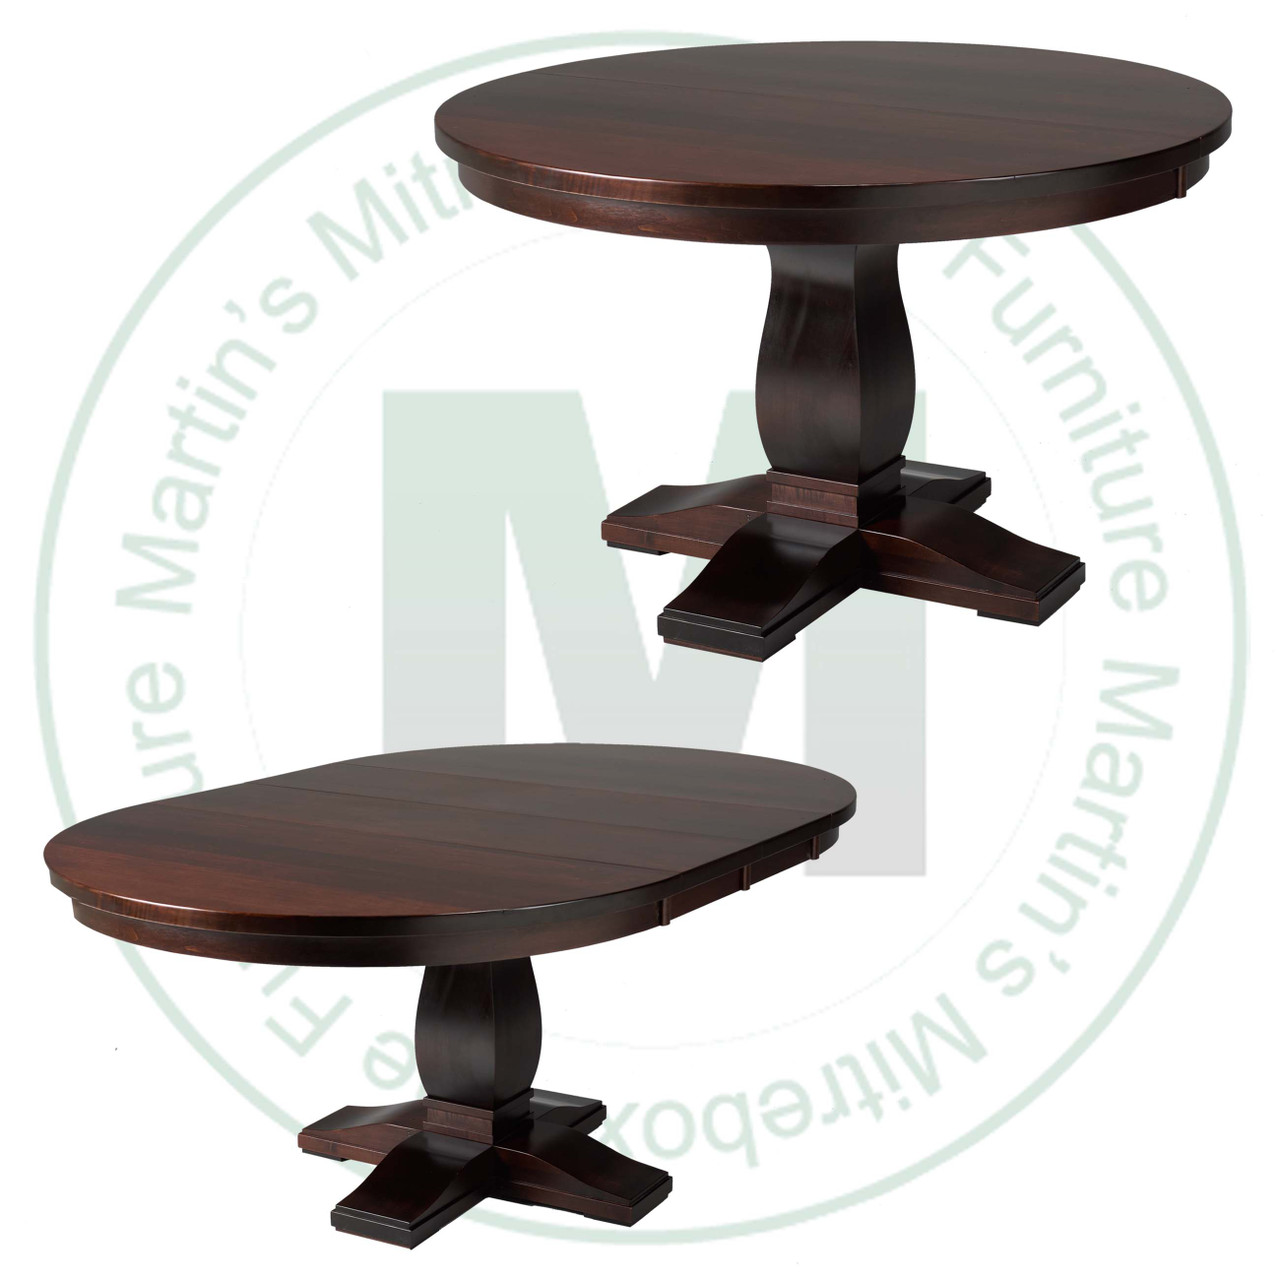 Oak Valencia Single Pedestal Table 48''D x 48''W x 30''H With 1 - 12'' Leaf Table